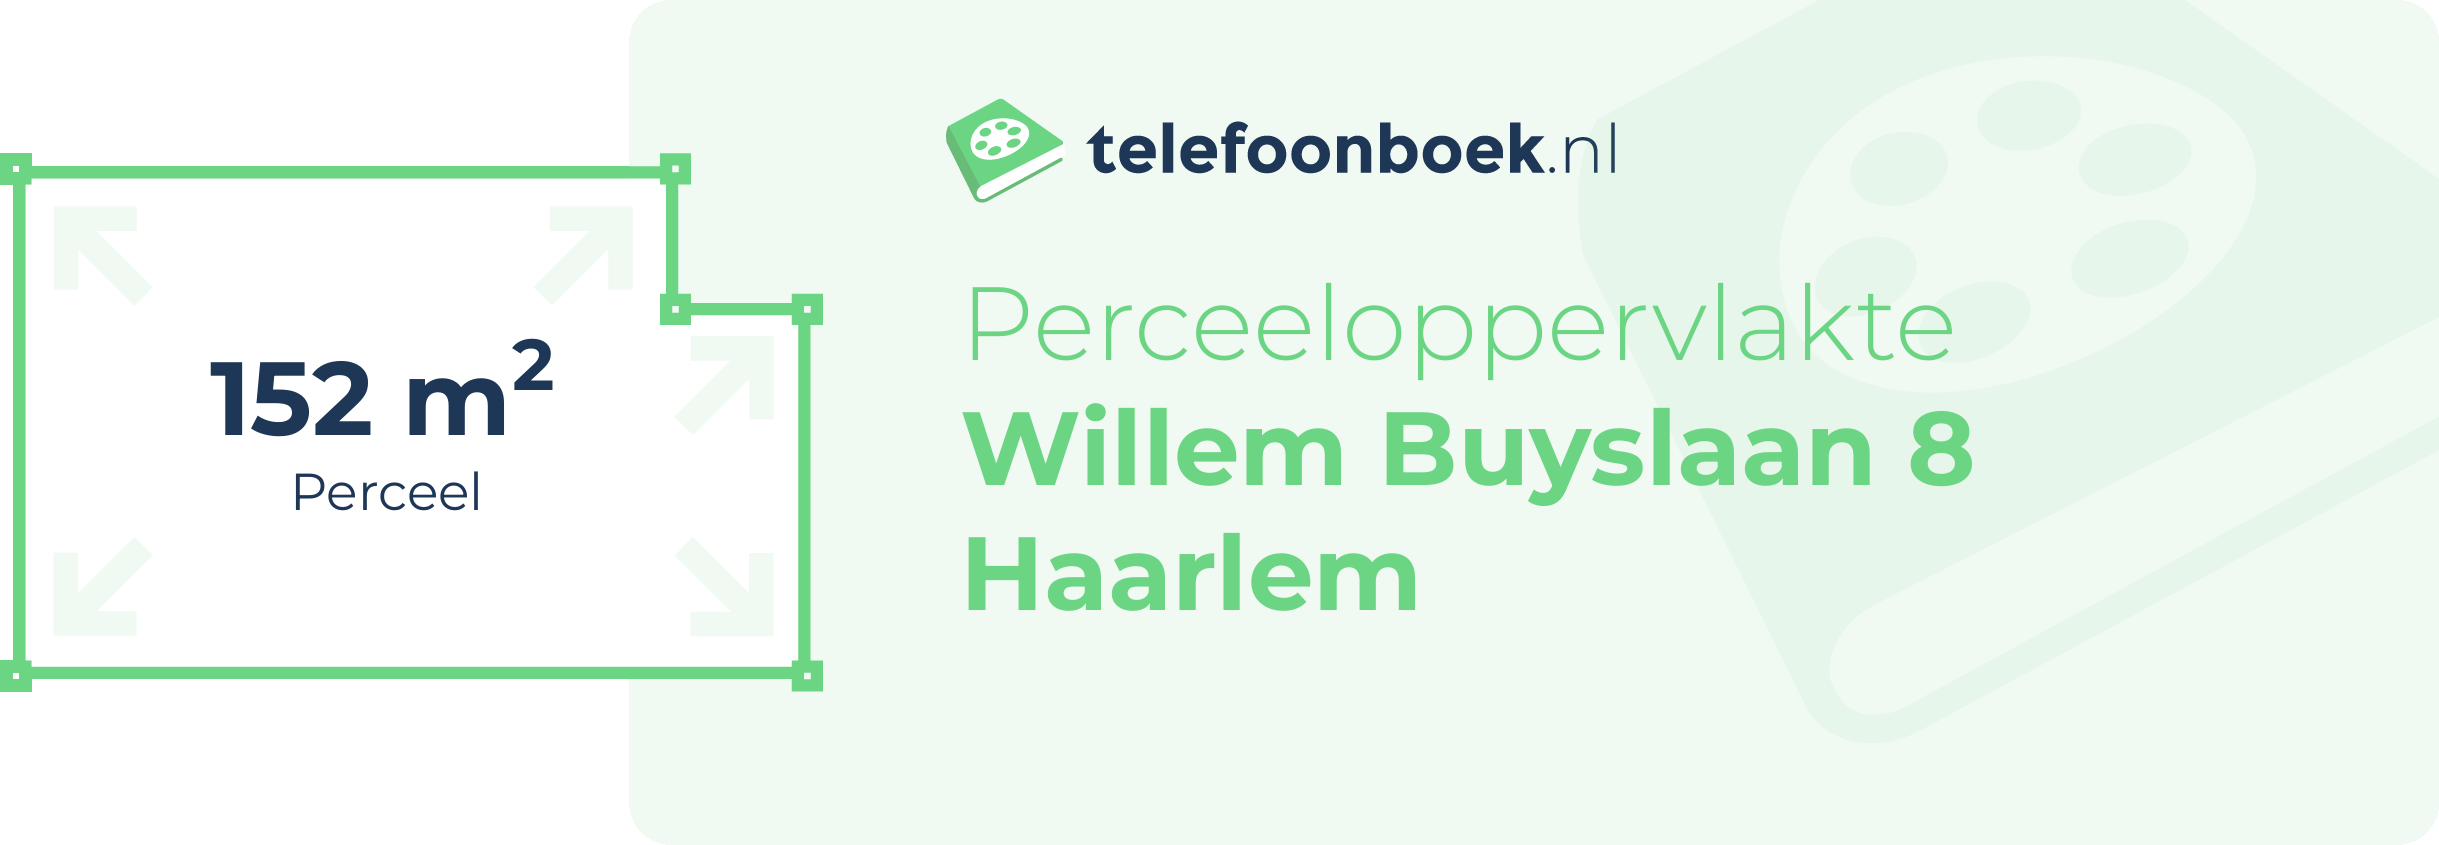 Perceeloppervlakte Willem Buyslaan 8 Haarlem